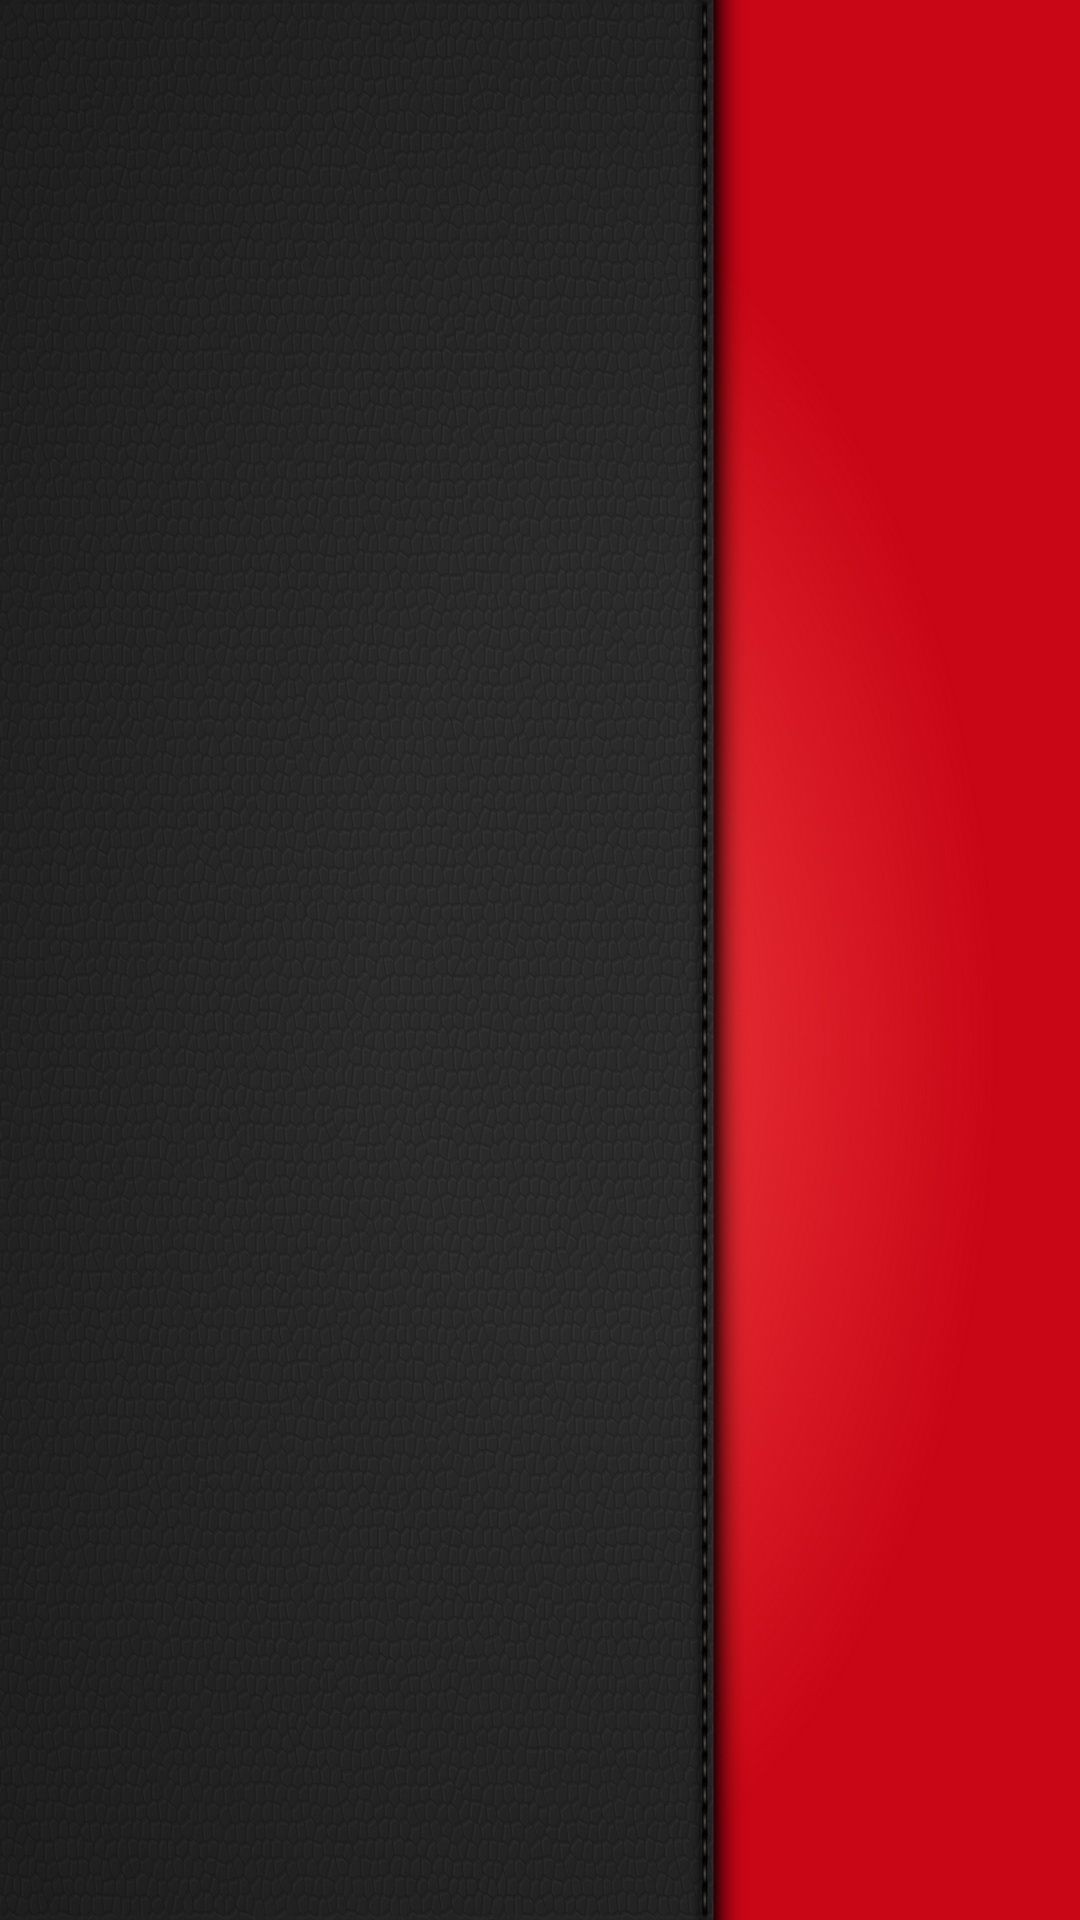 Orange Black Wallpaper Group Red iPhone 6 Plus Wallpaper Black And Red